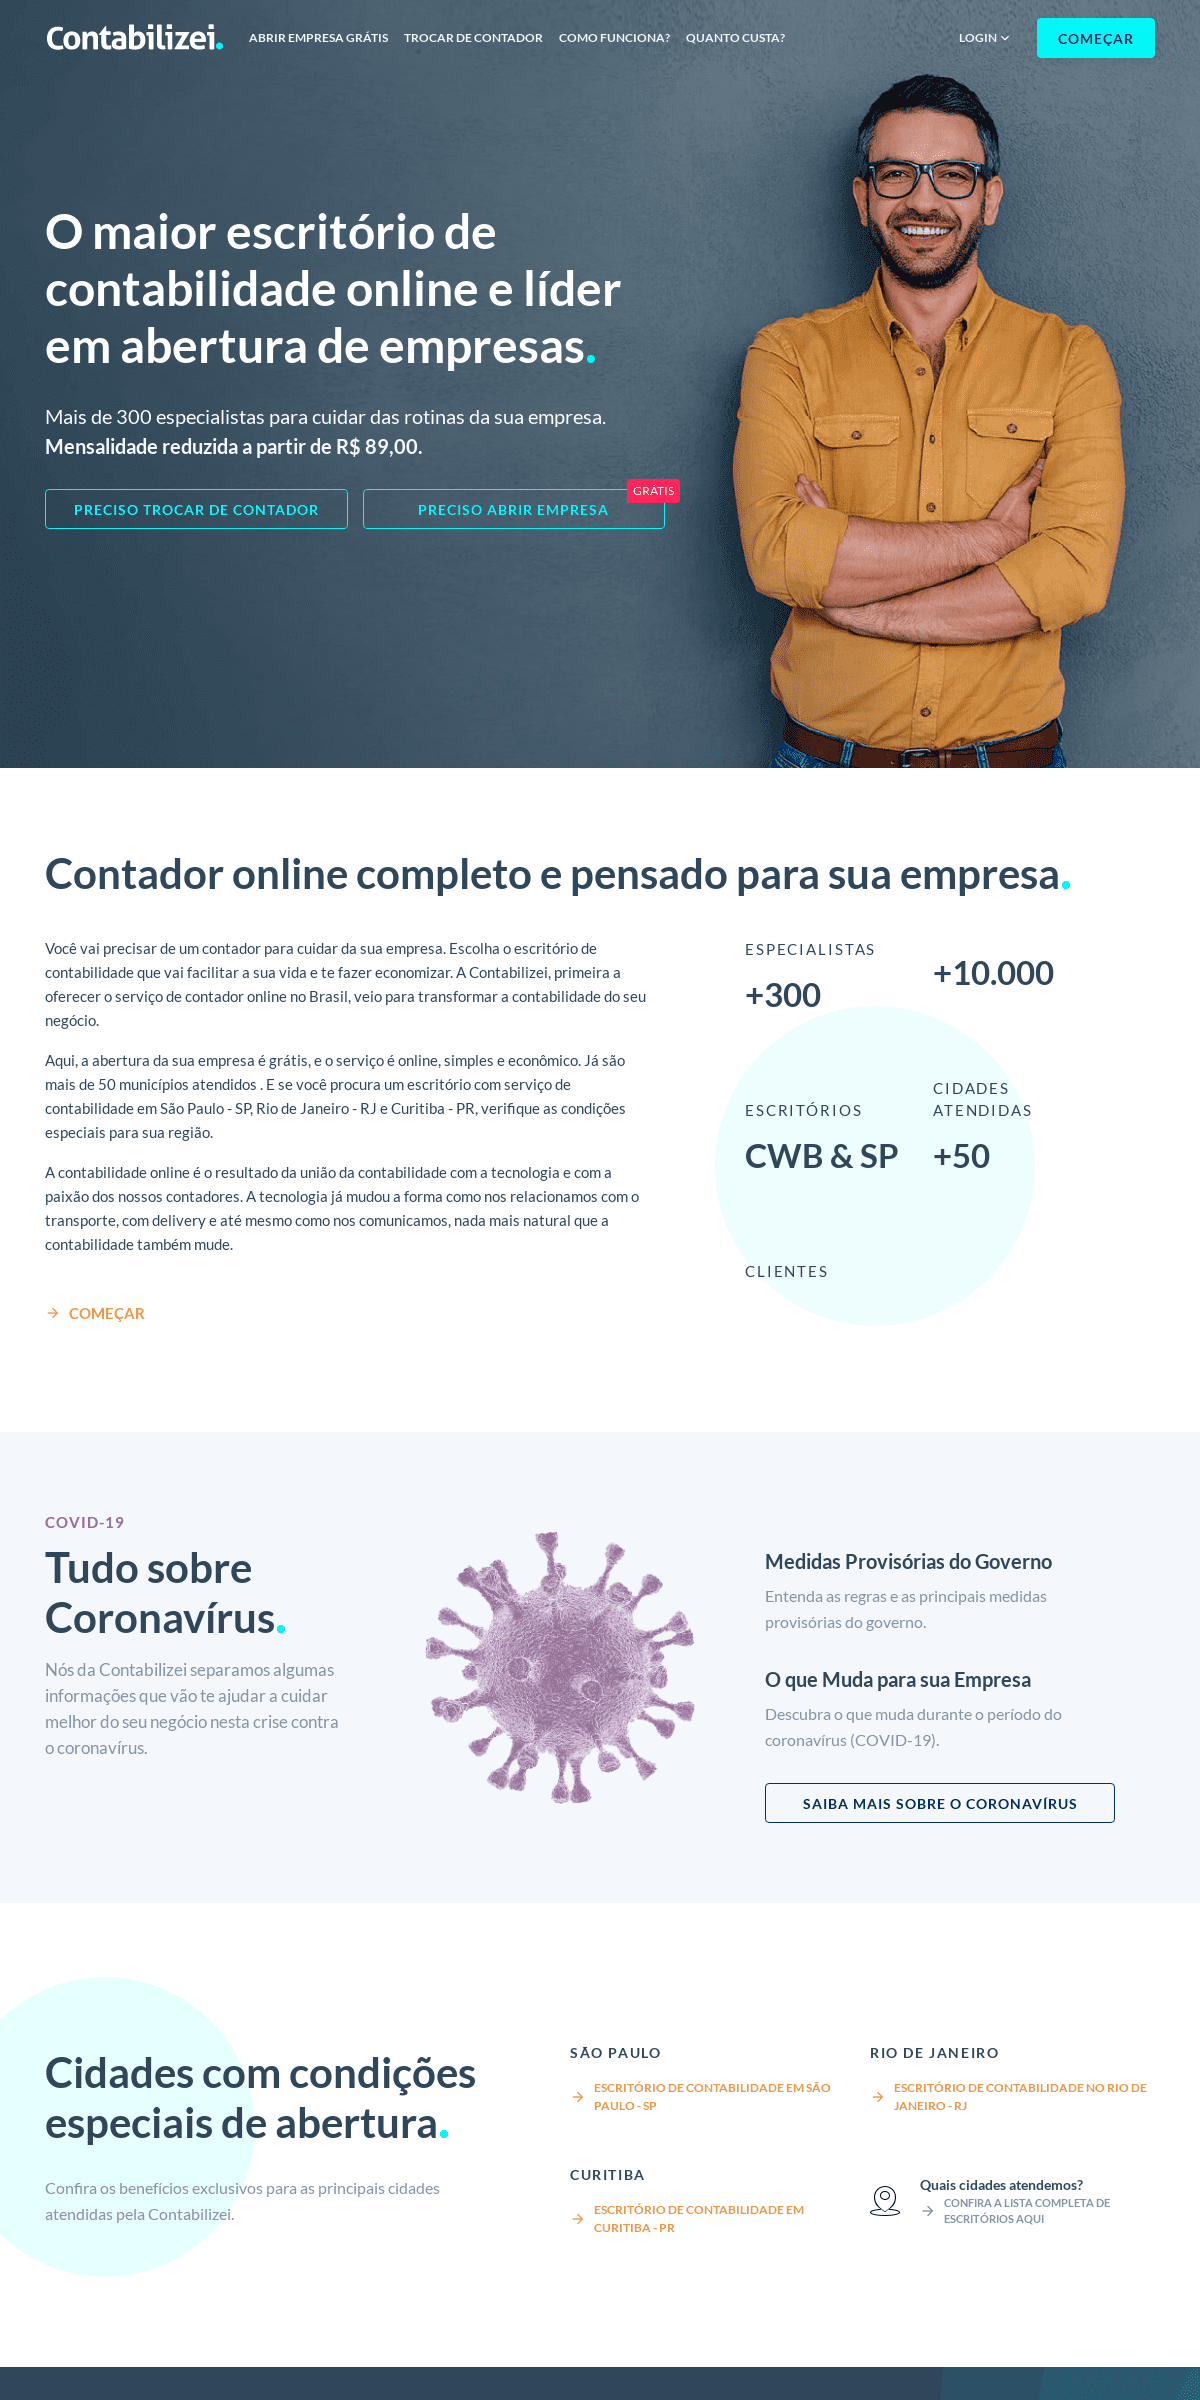 A complete backup of contabilizei.com.br